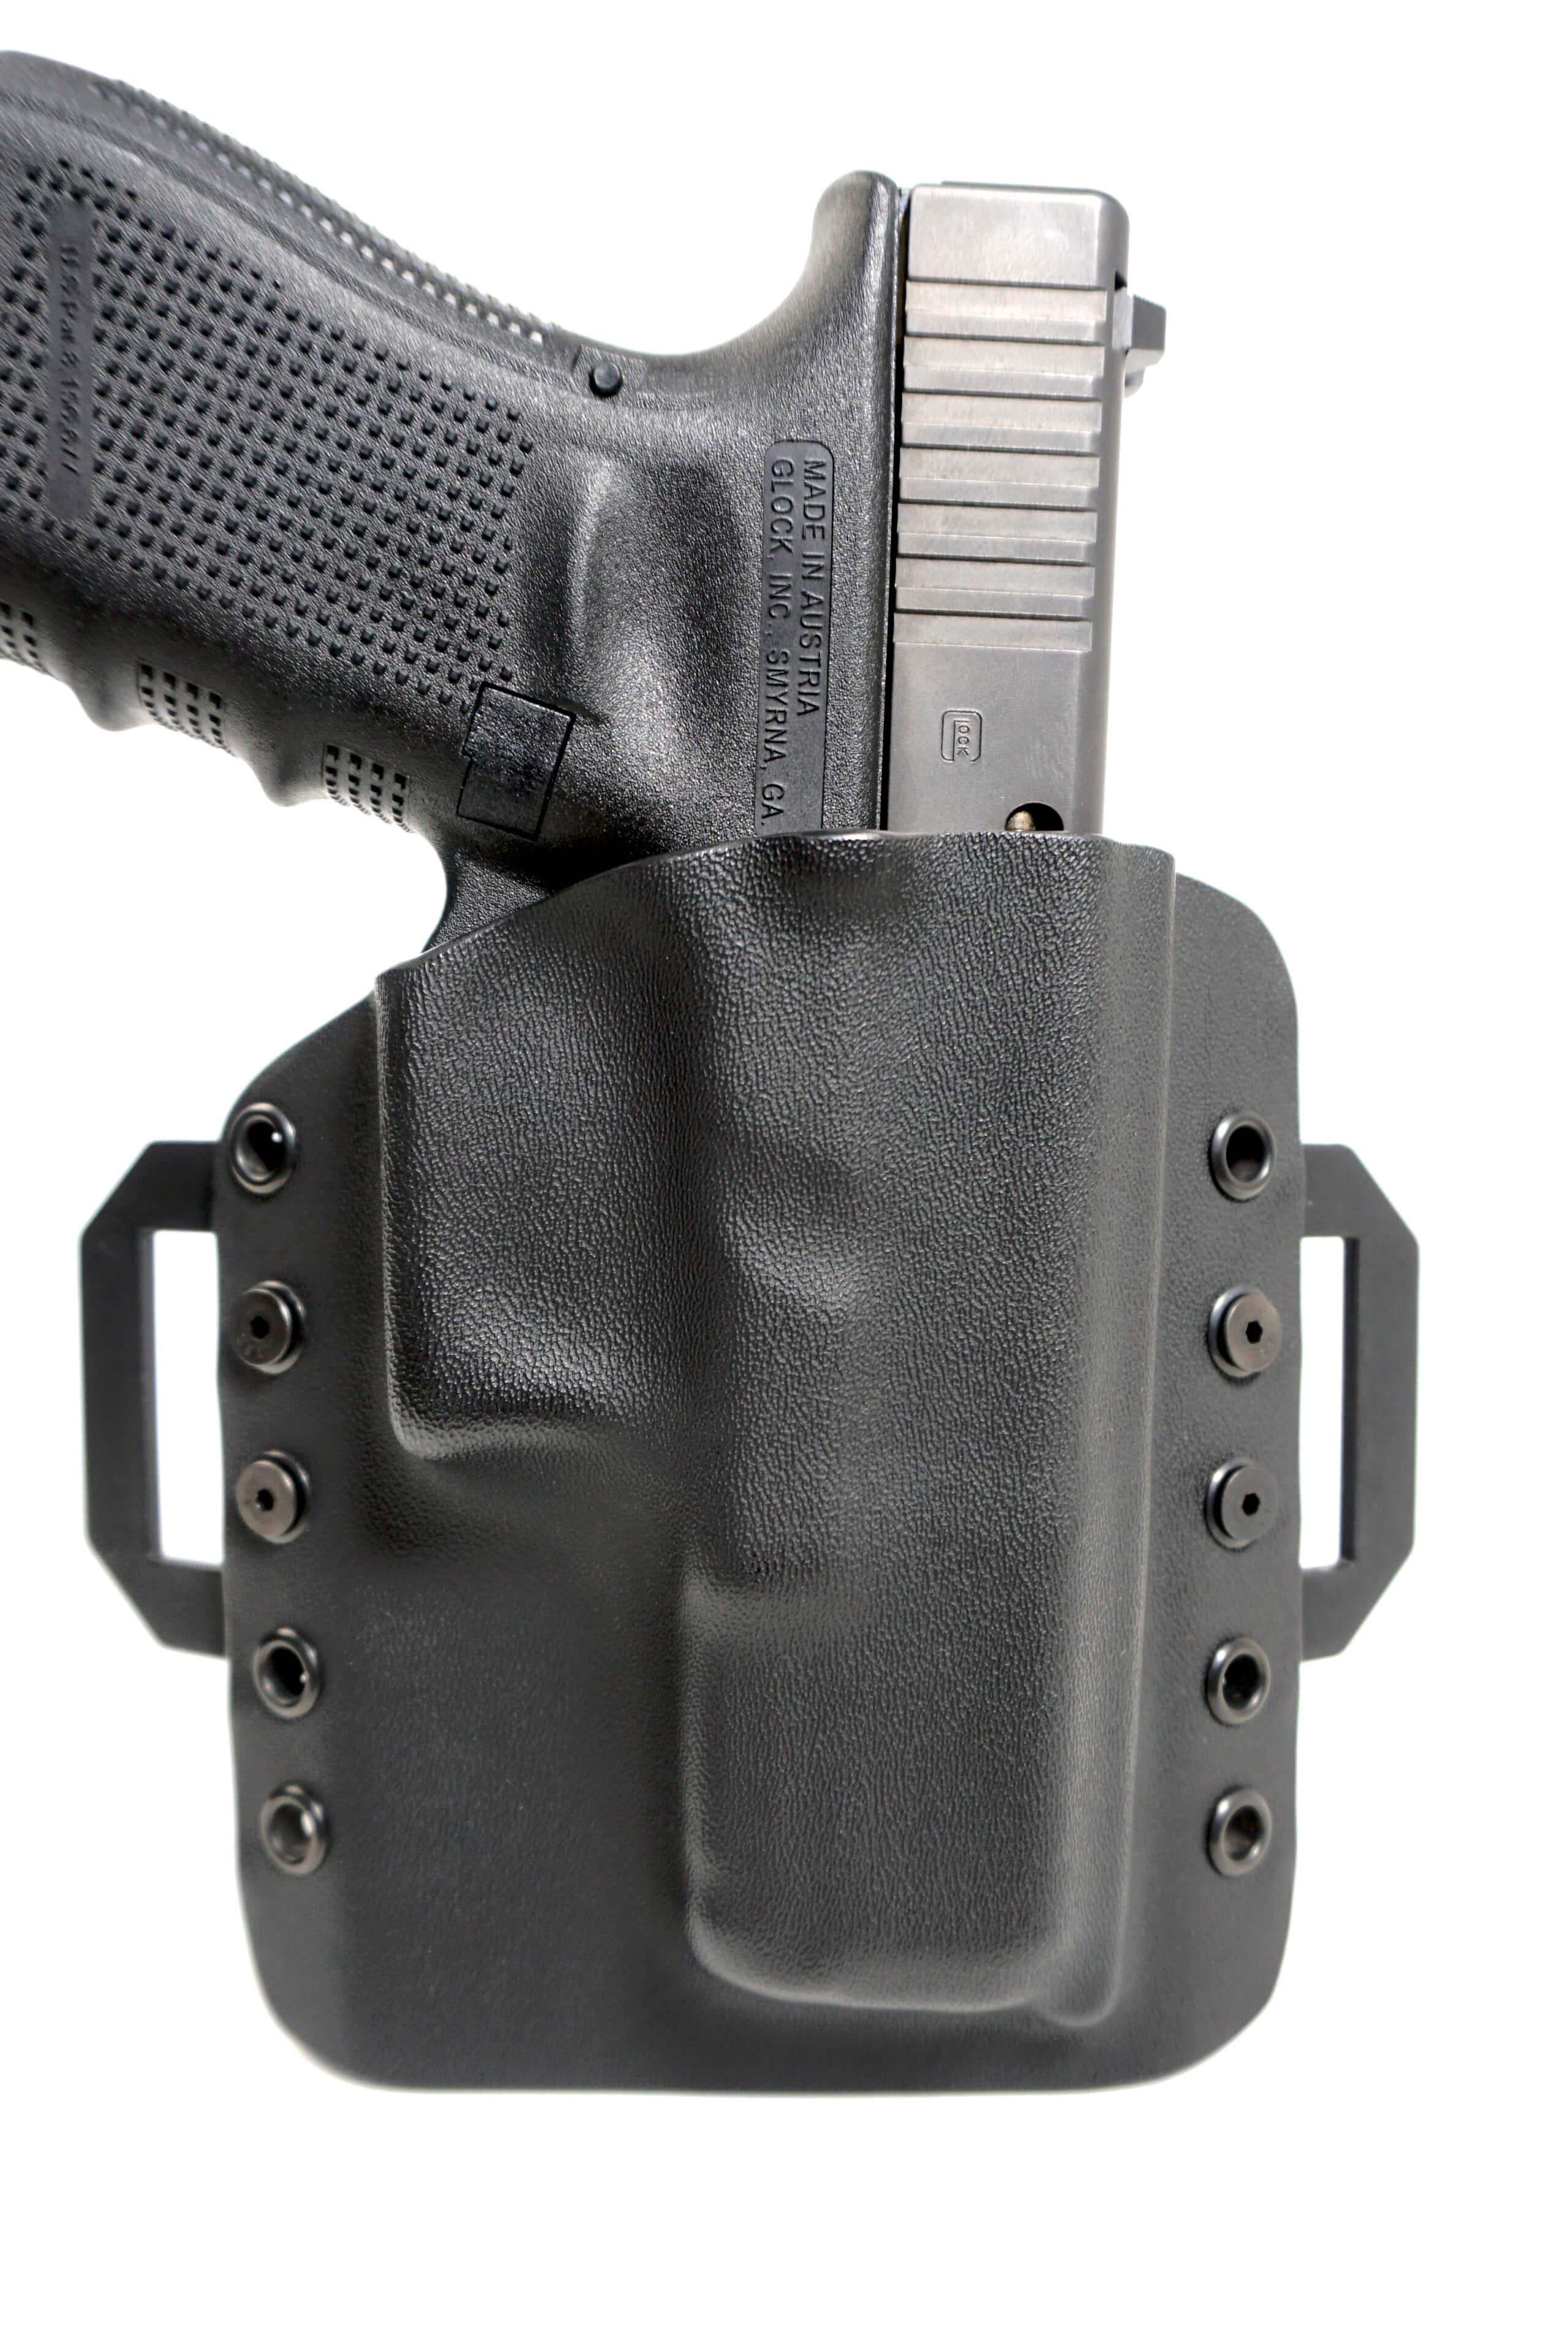 Black Details about  / Kydex holster Fits Sig P938